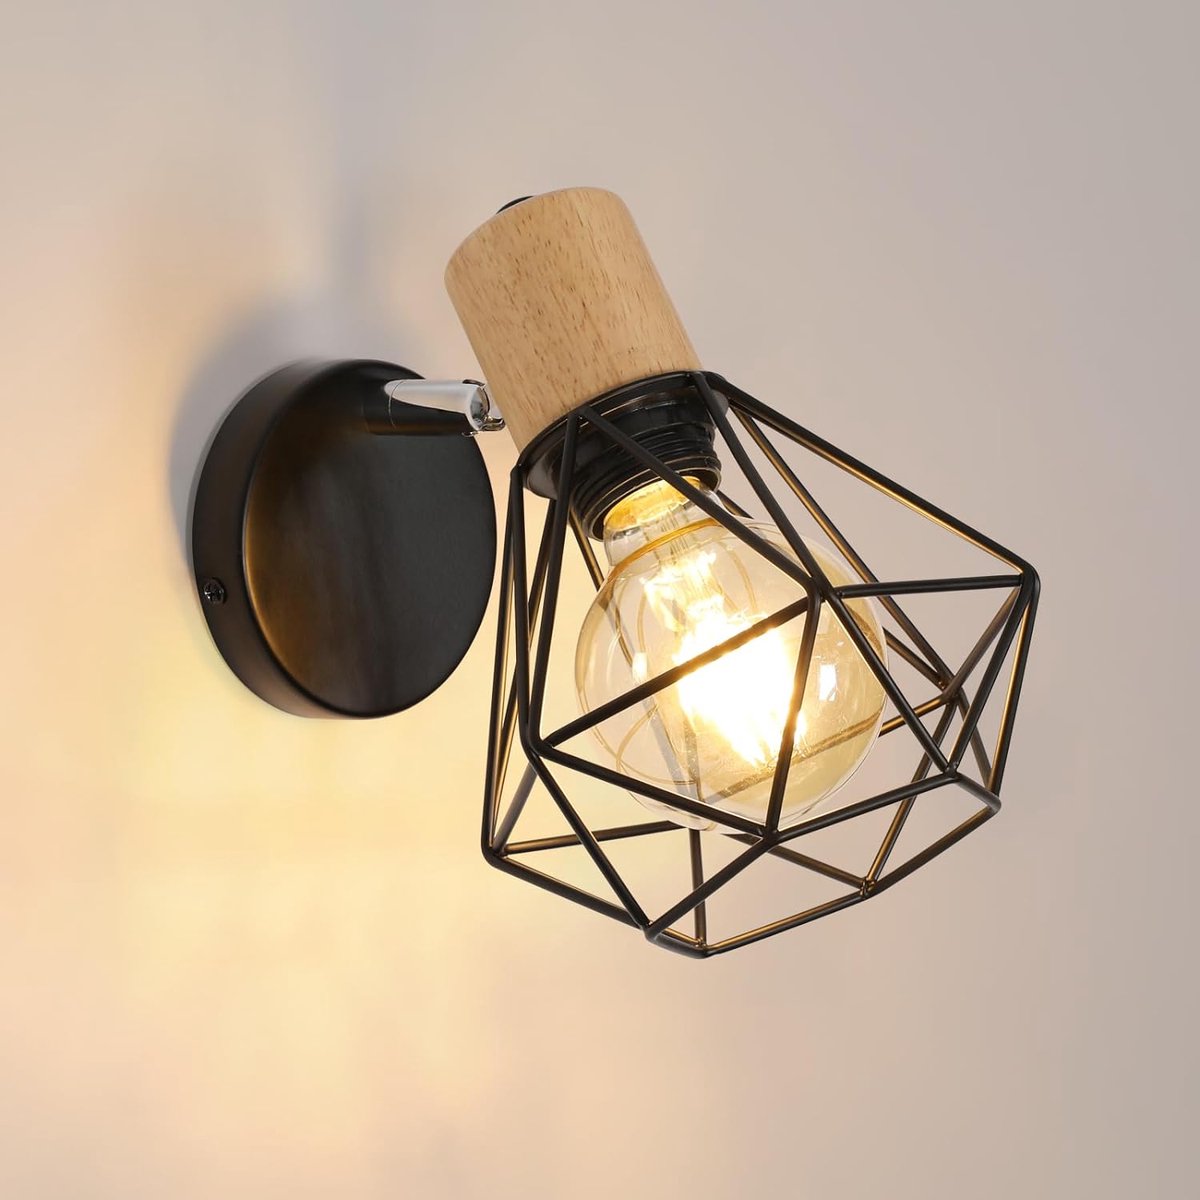 Goeco Wandlamp - 20cm - Klein - E27 - Vintage Industriële Wandlamp - Verstelbaar 350° - Draaibaar 90° - Zonder Lamp